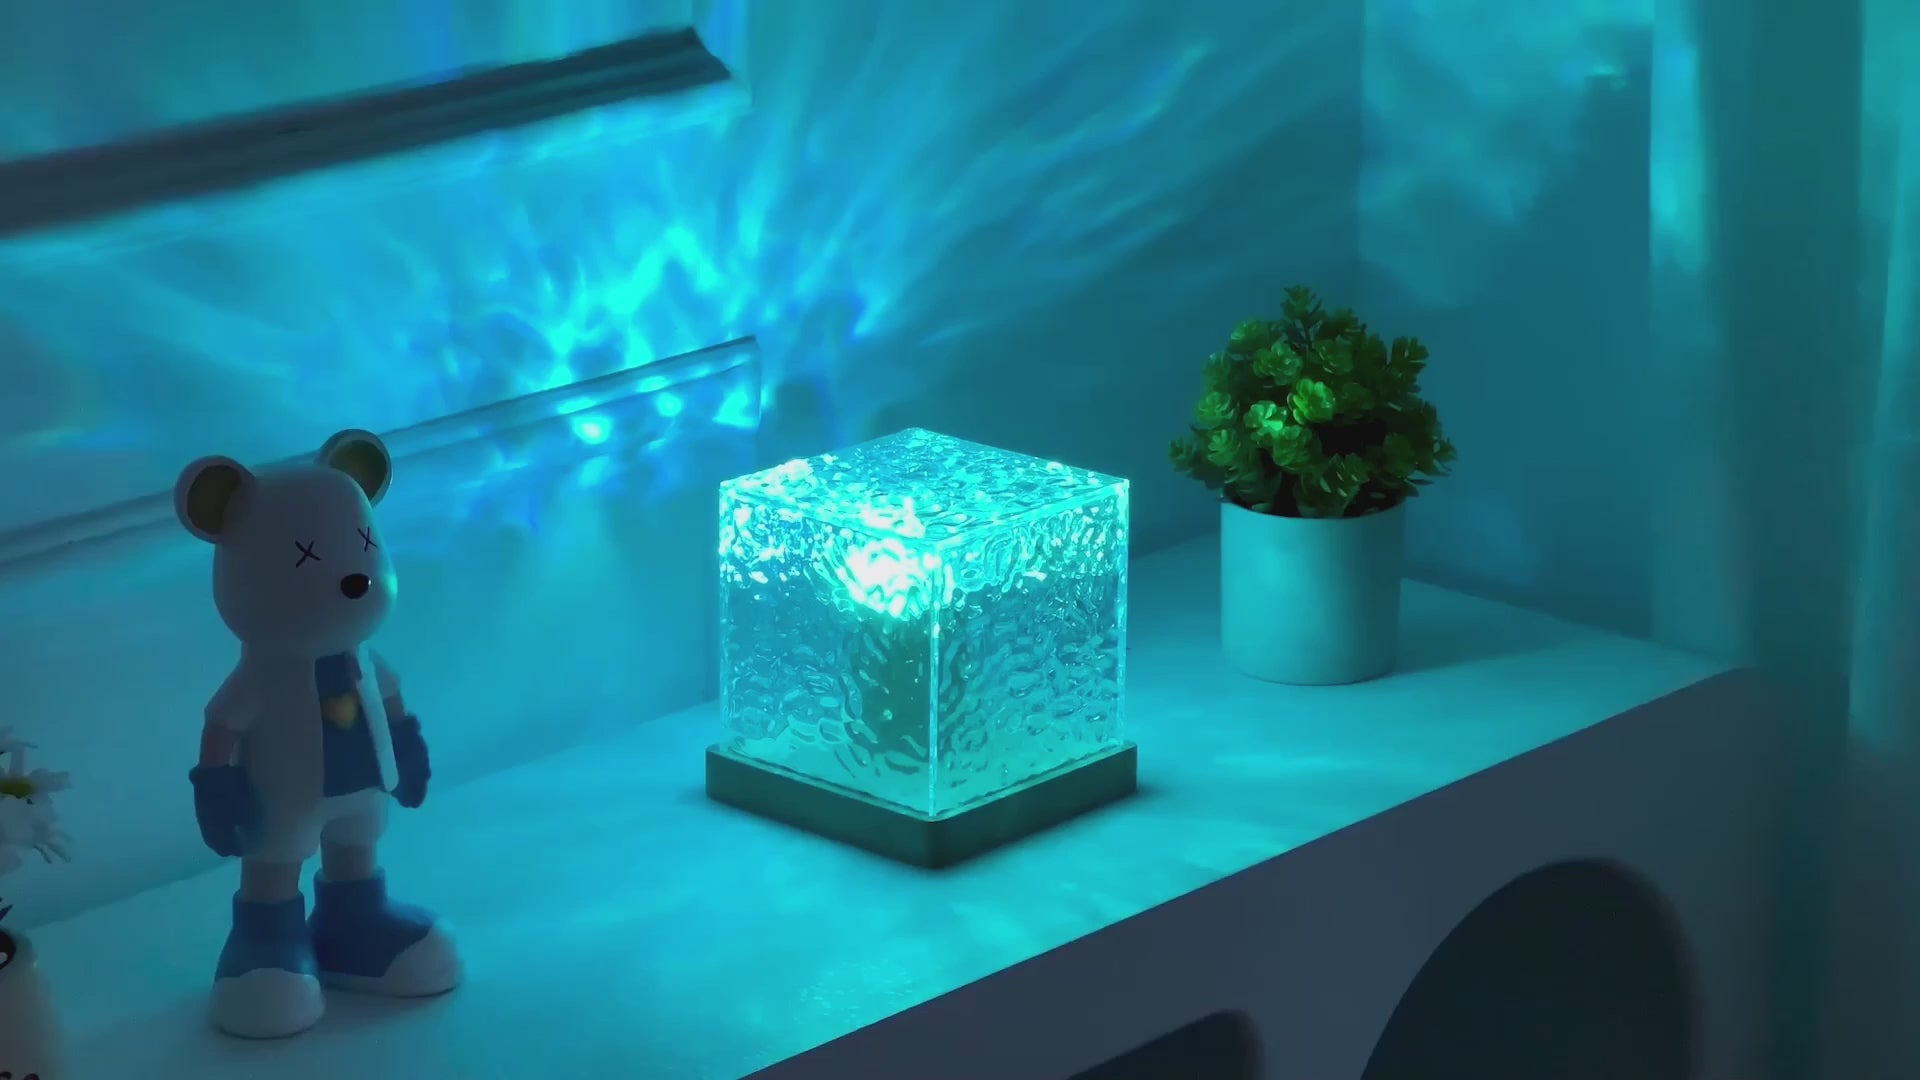 Hearthwares™ Aurora Crystal Lamp